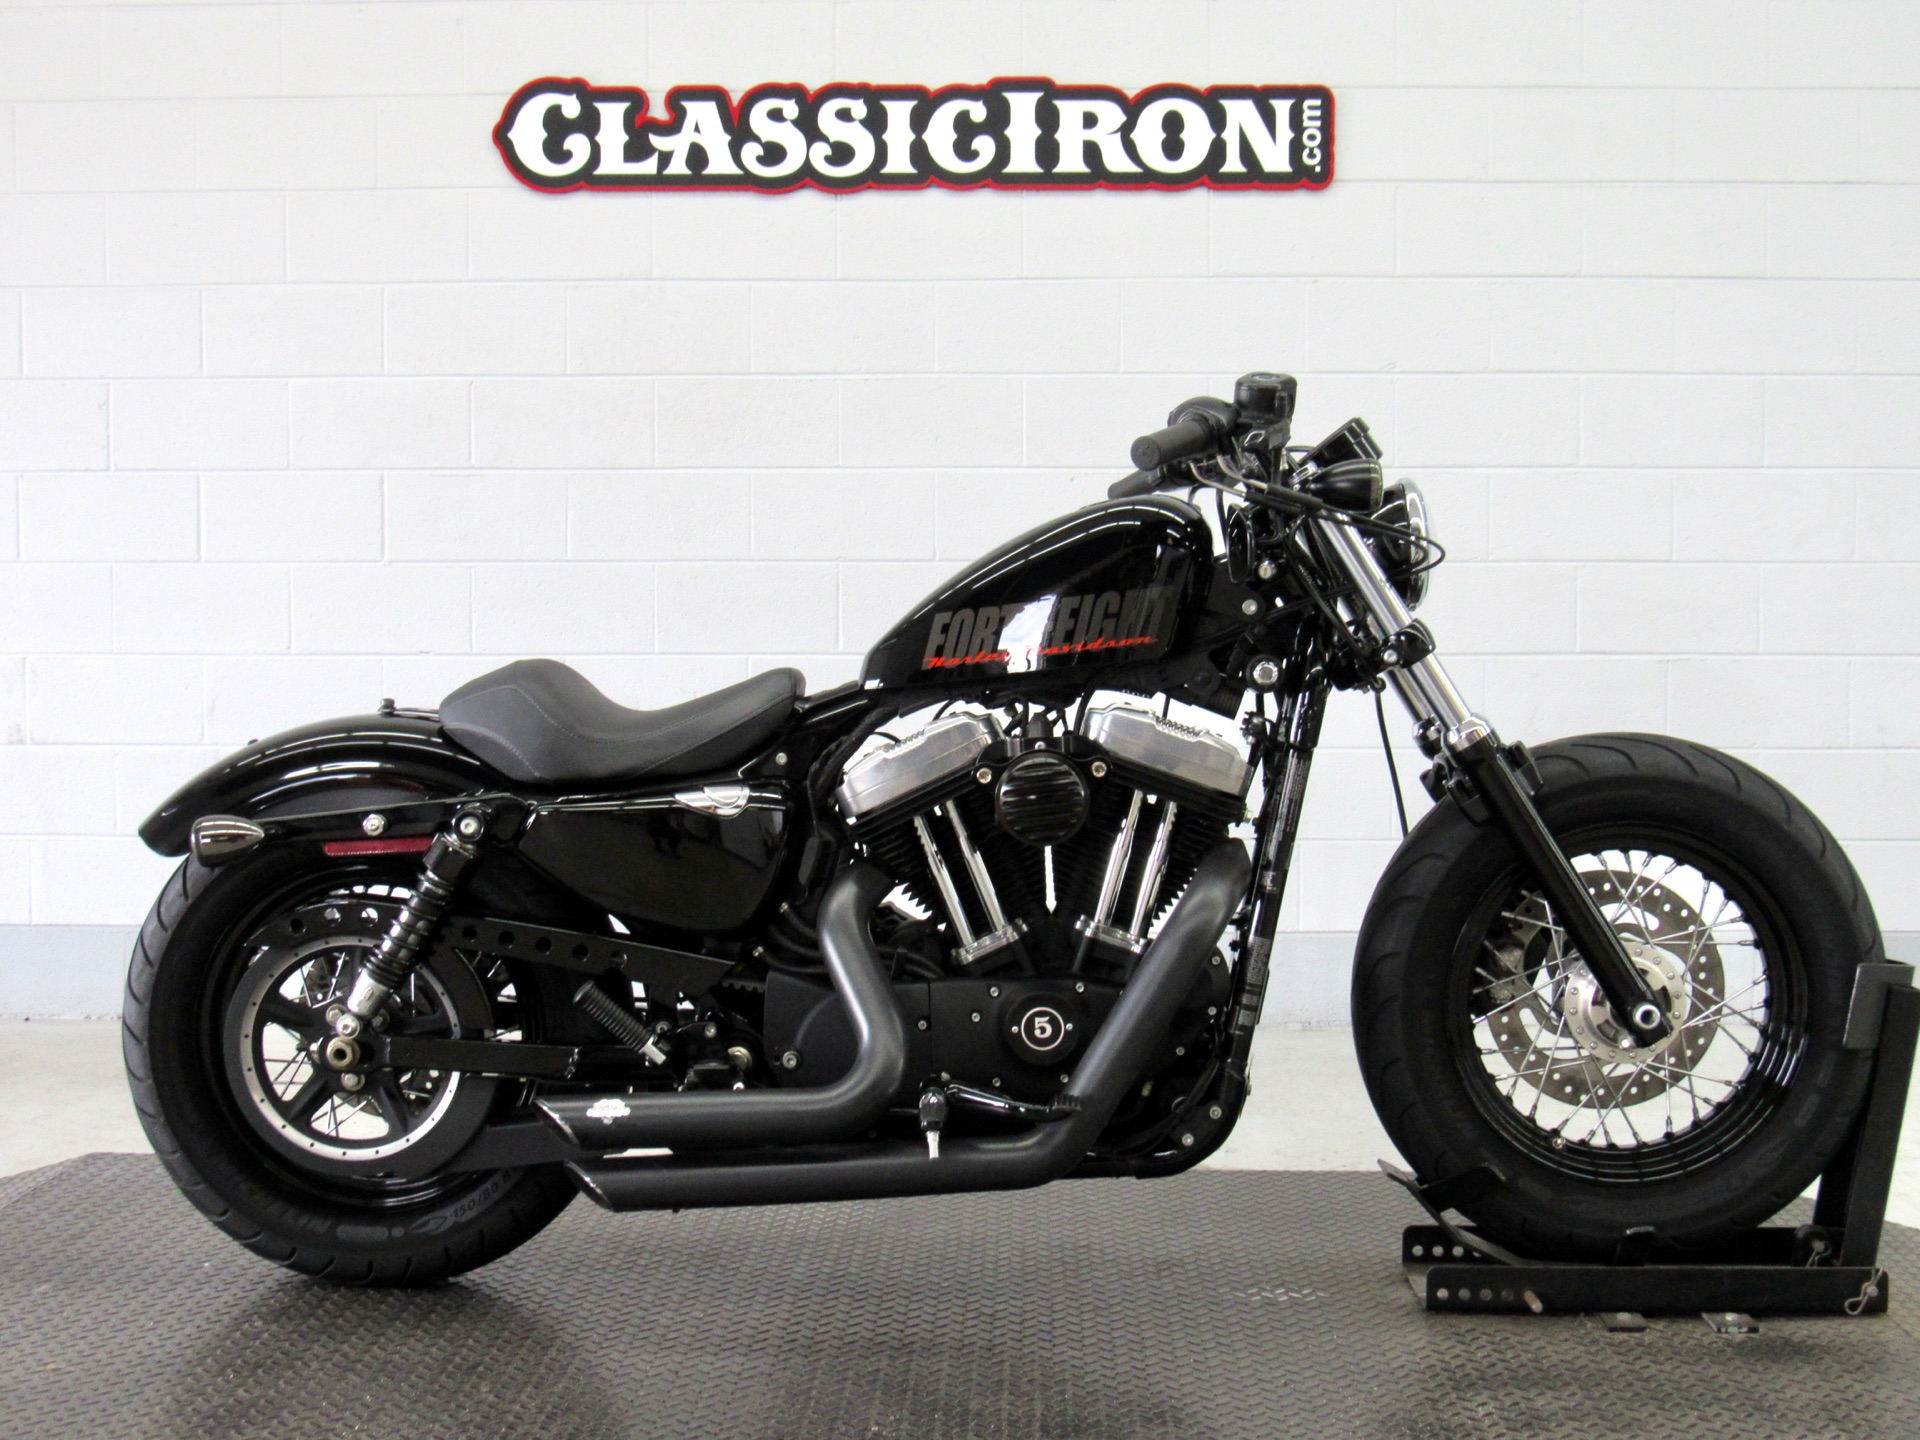 2014 Harley-Davidson Sportster® Forty-Eight® in Fredericksburg, Virginia - Photo 1